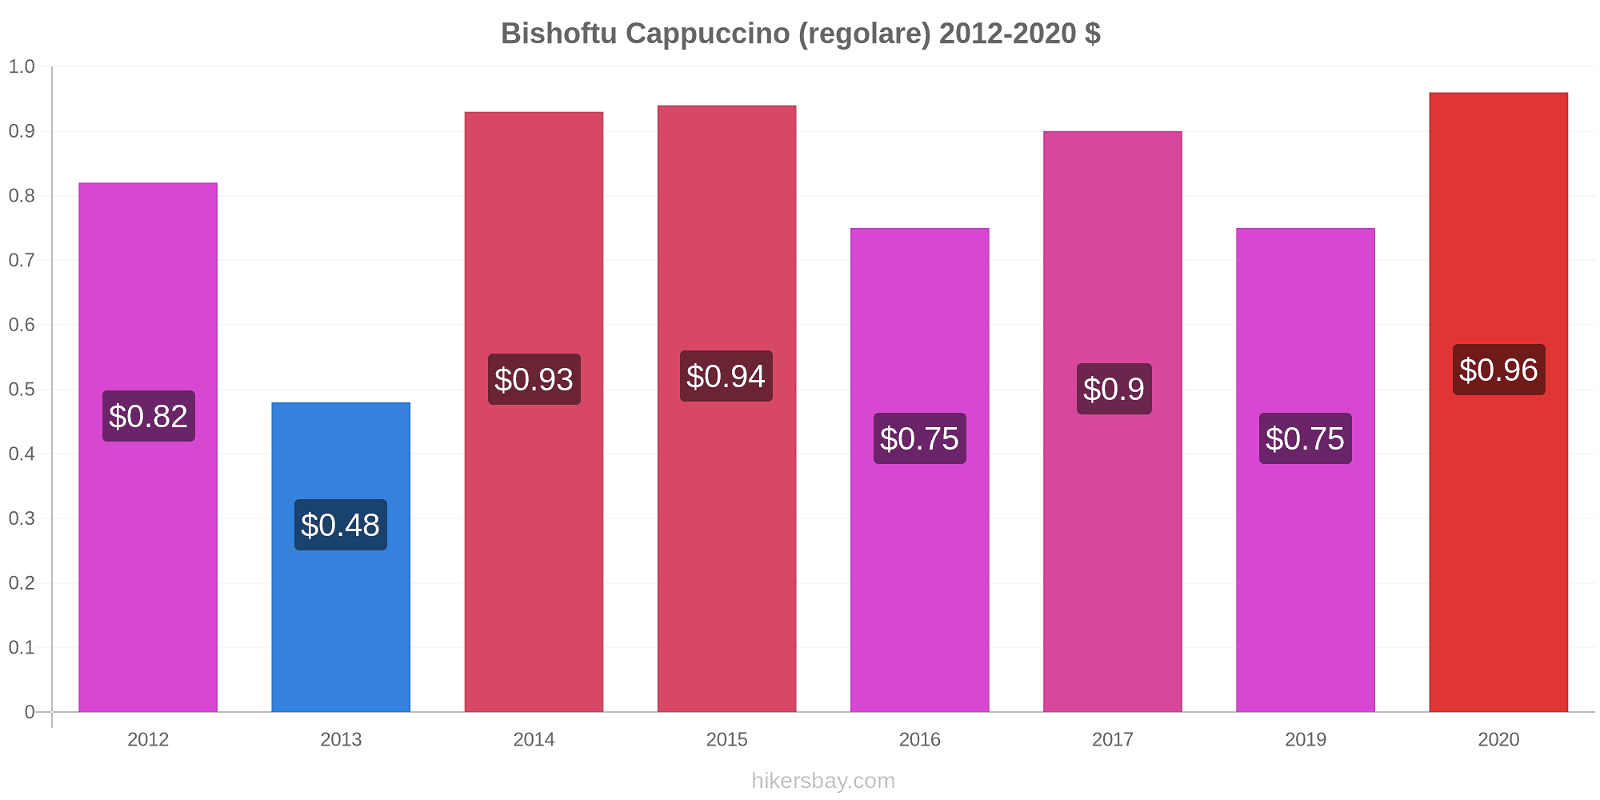 Bishoftu variazioni di prezzo Cappuccino (normale) hikersbay.com